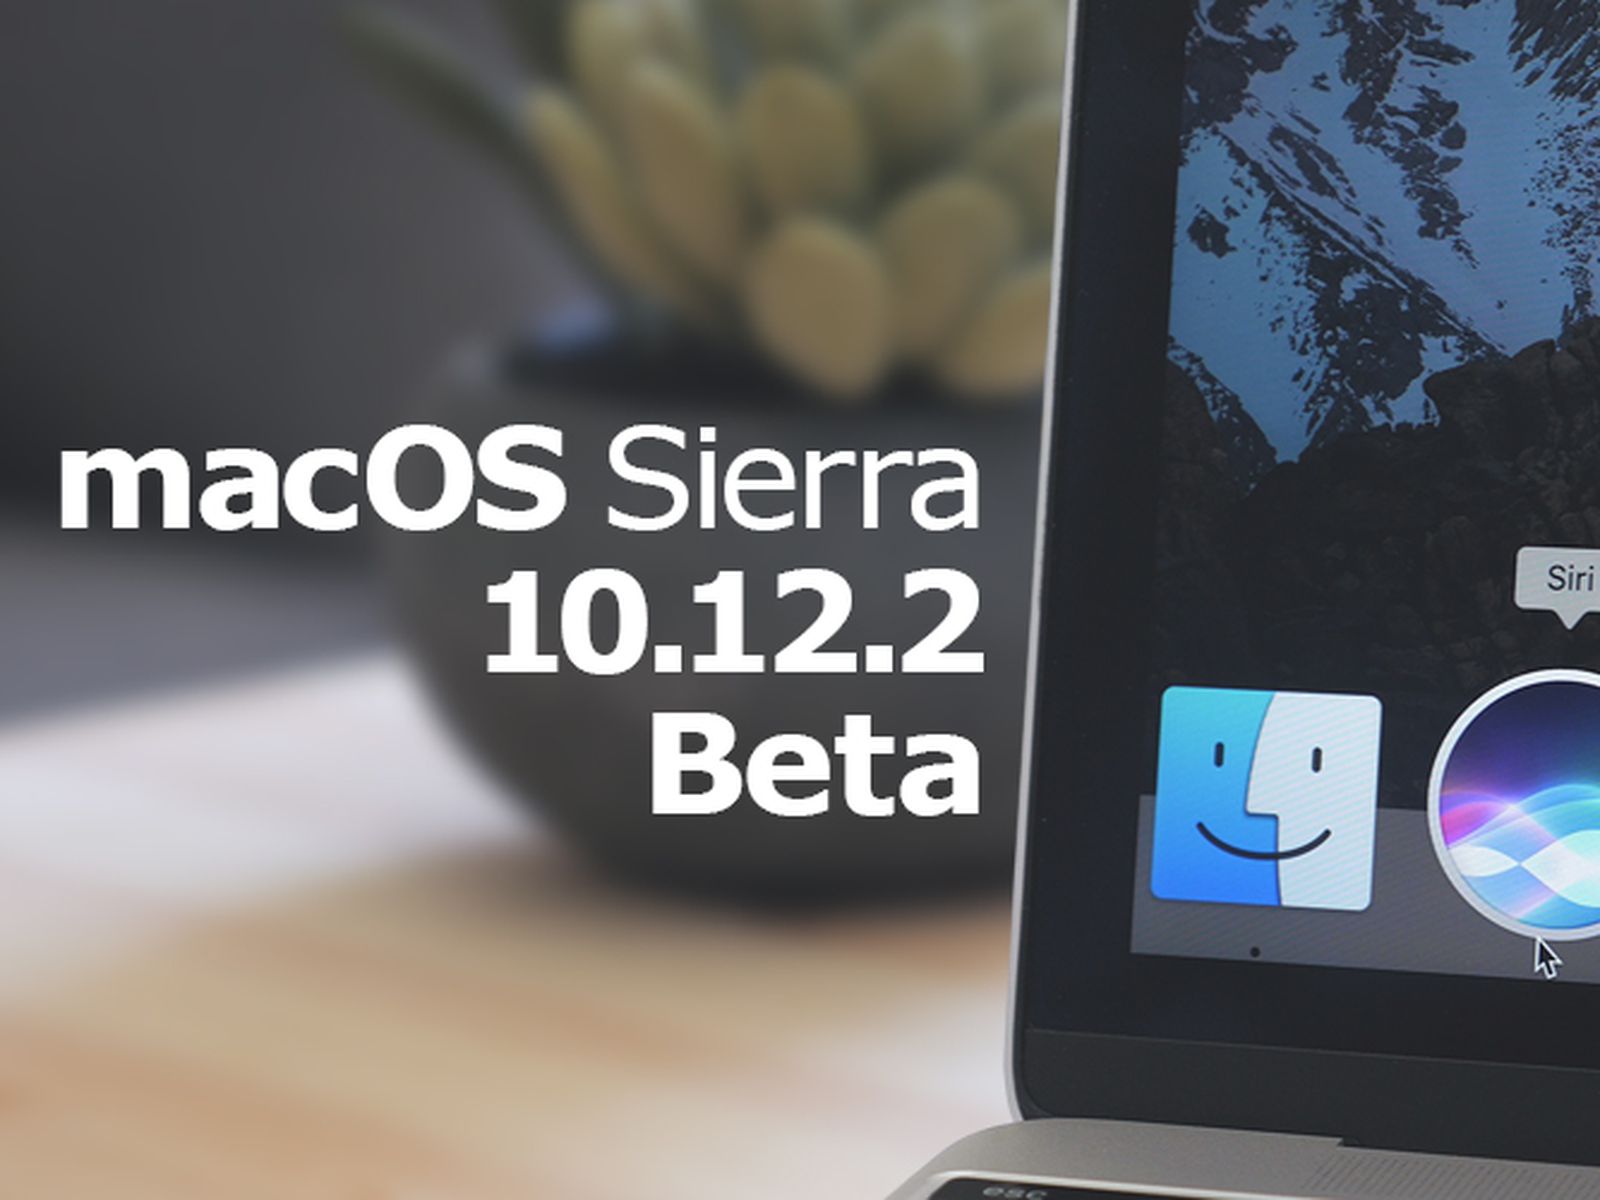 2017 best photo software for mac os sierra 10.12.2